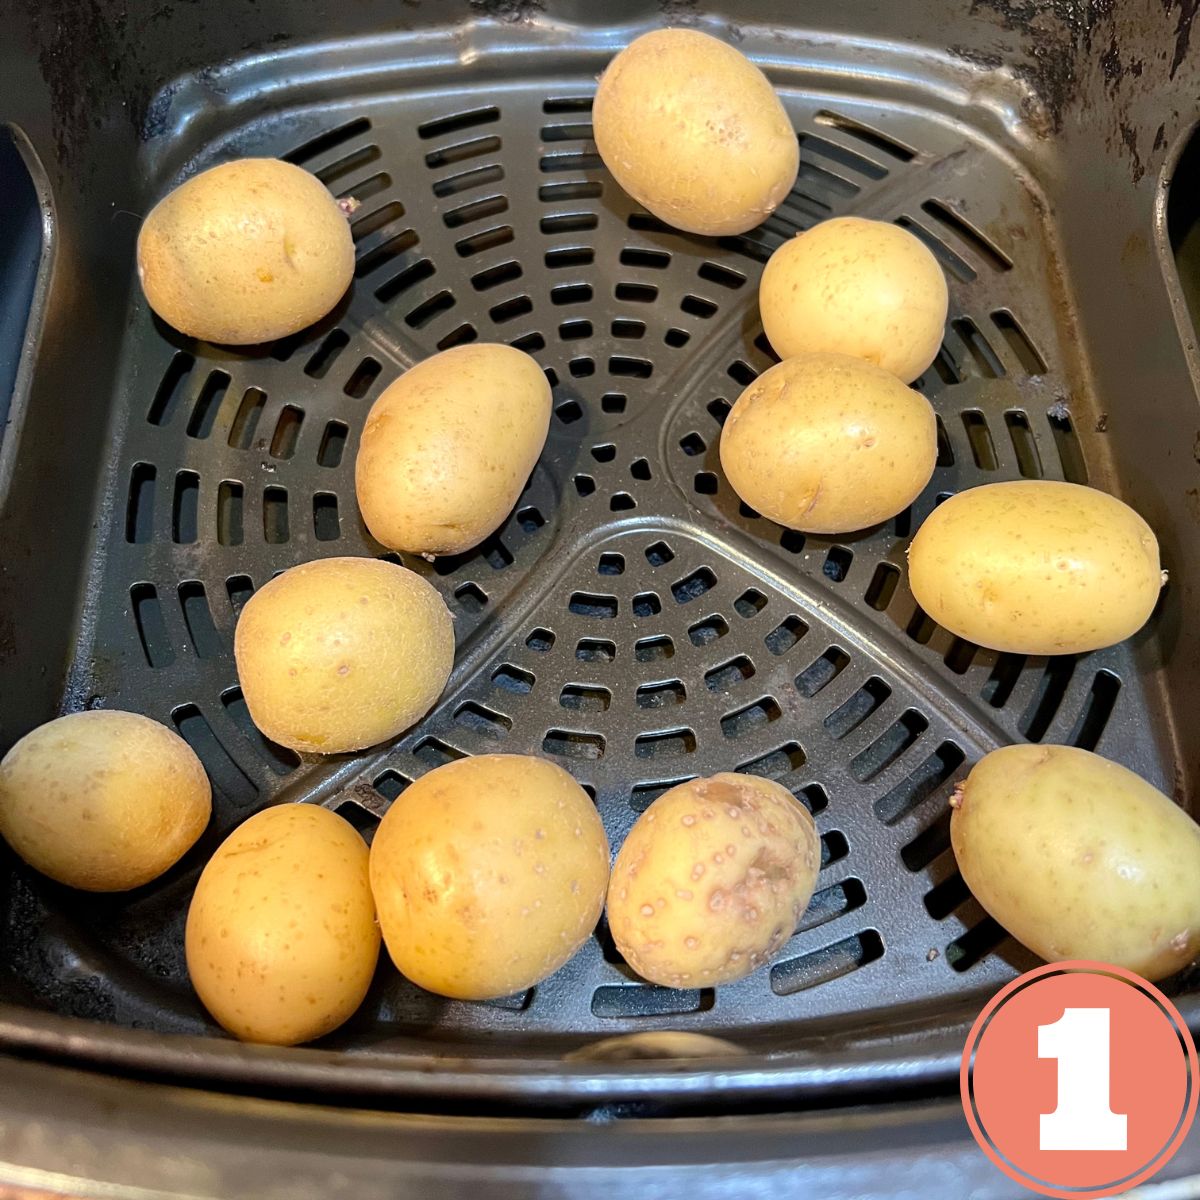 Mini golden potatoes in an aibfryer basket